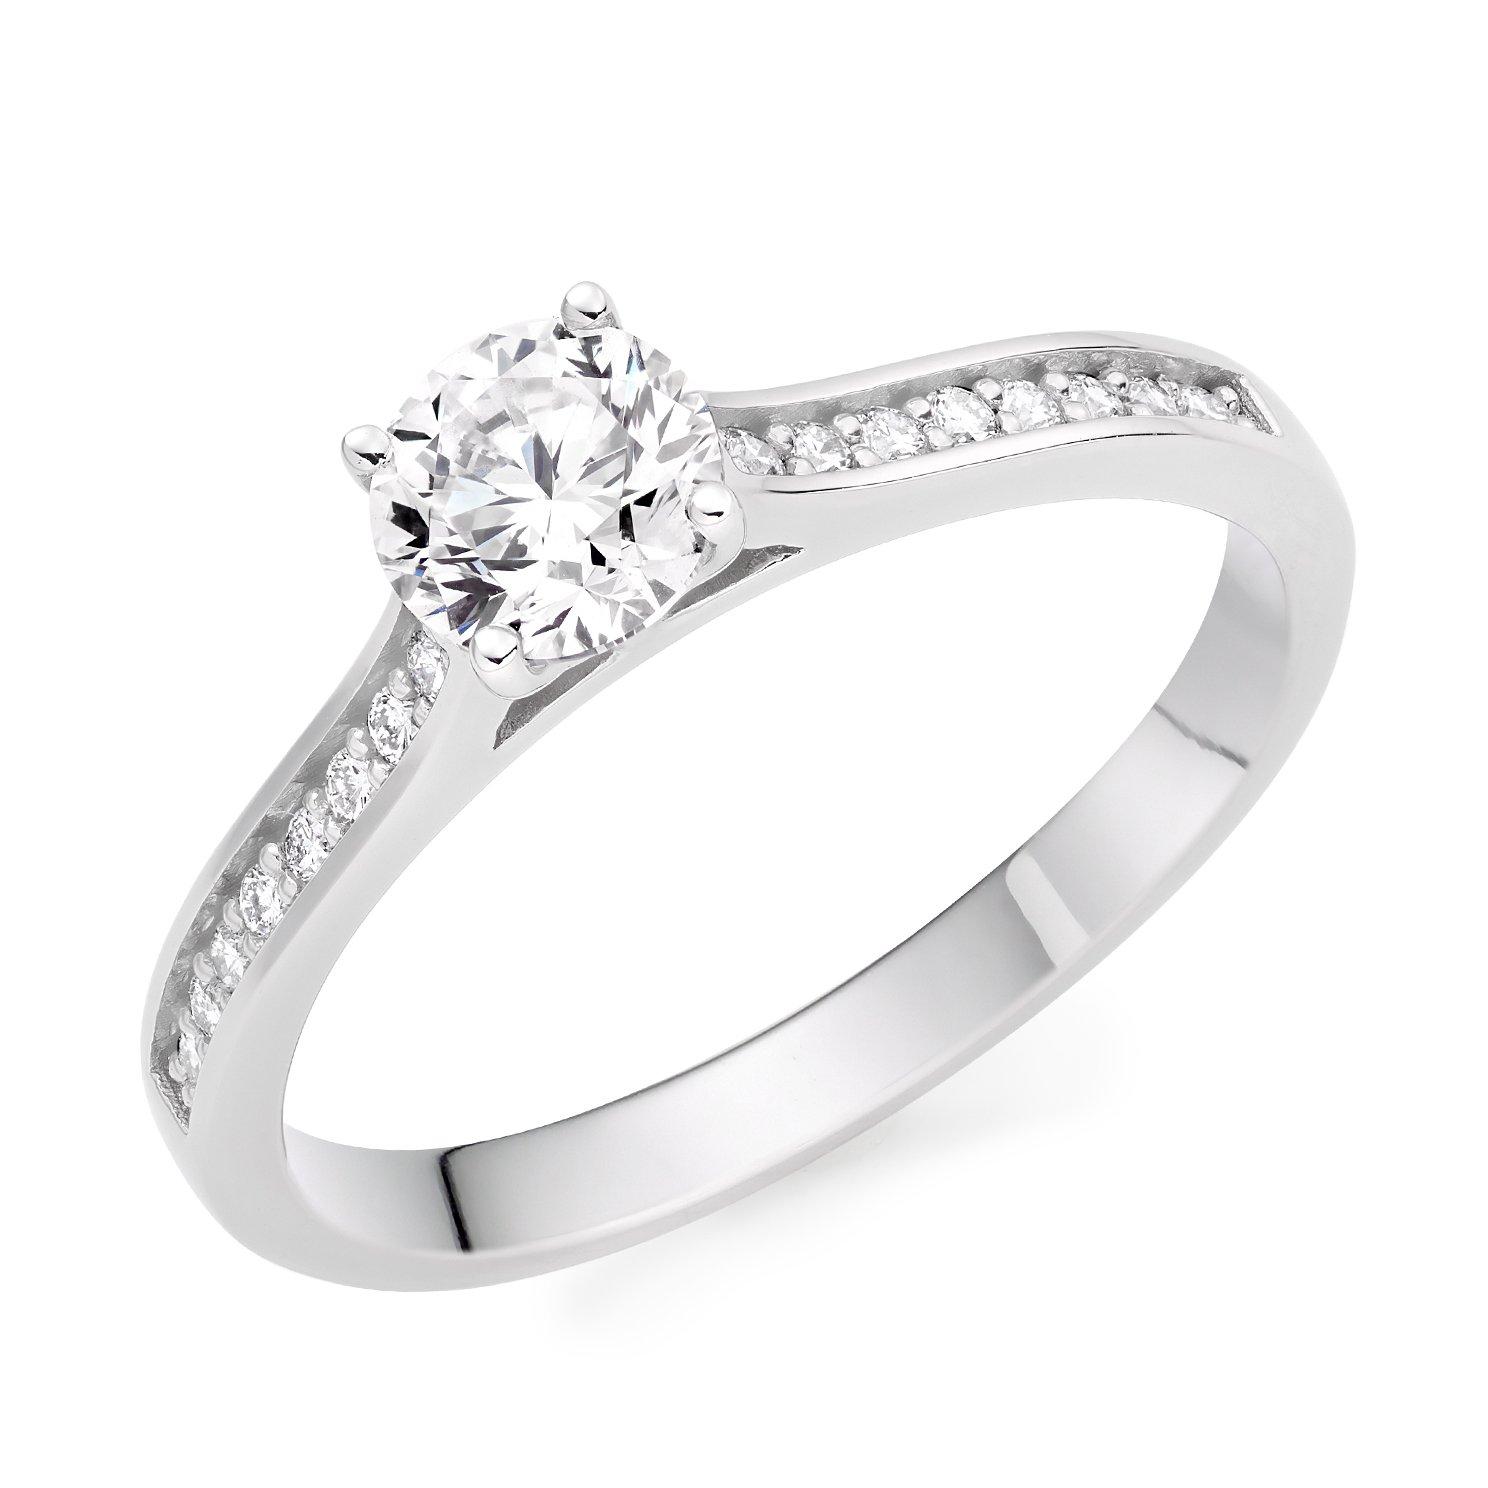 Platinum Diamond Solitaire Ring | 0137332 | Beaverbrooks the Jewellers